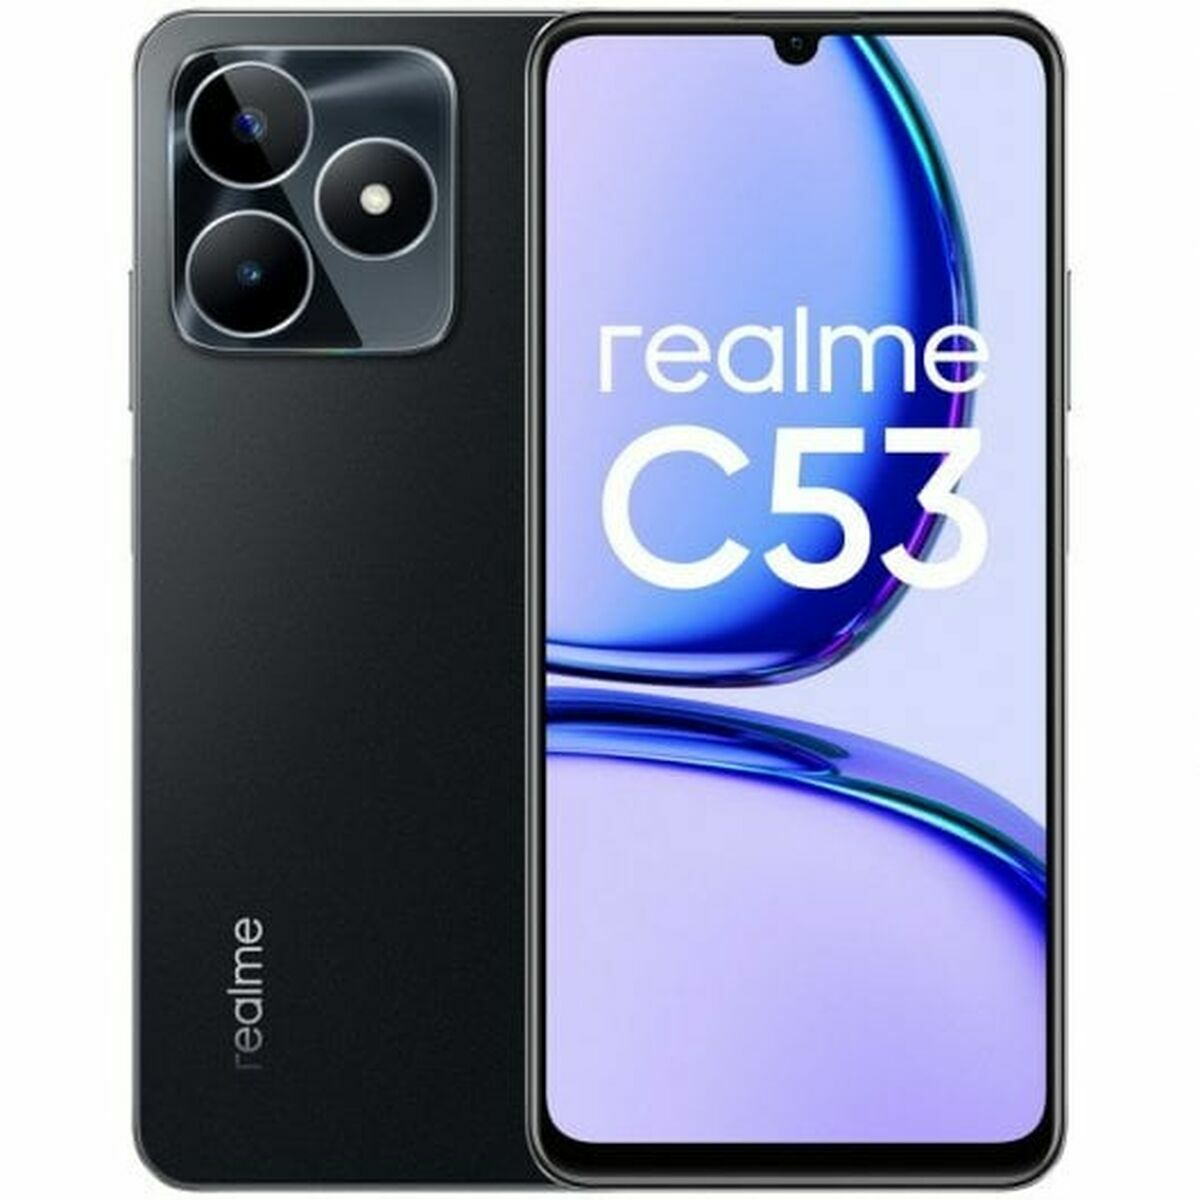 Smartphone Realme C53 Black 6 GB RAM 6,74" 128 GB